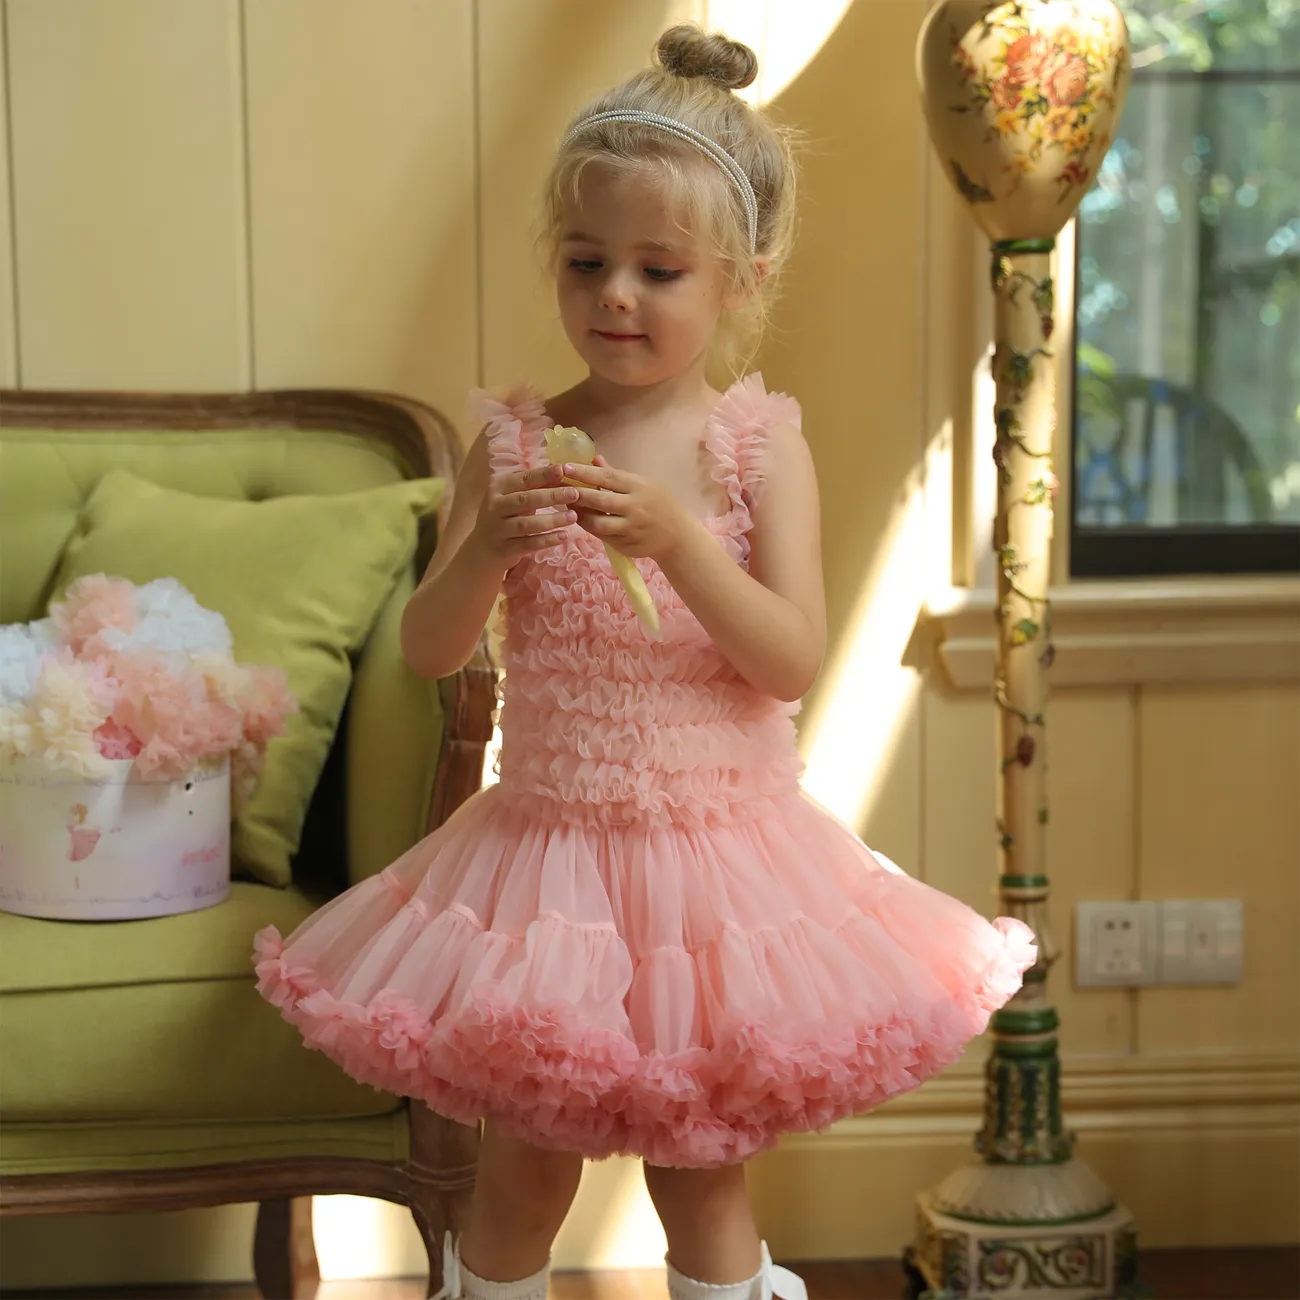 Sweet Girl Tutu Dress with Agaric Edge, Cotton-Spandex Blend, for Kids, Regular Pink big image 1